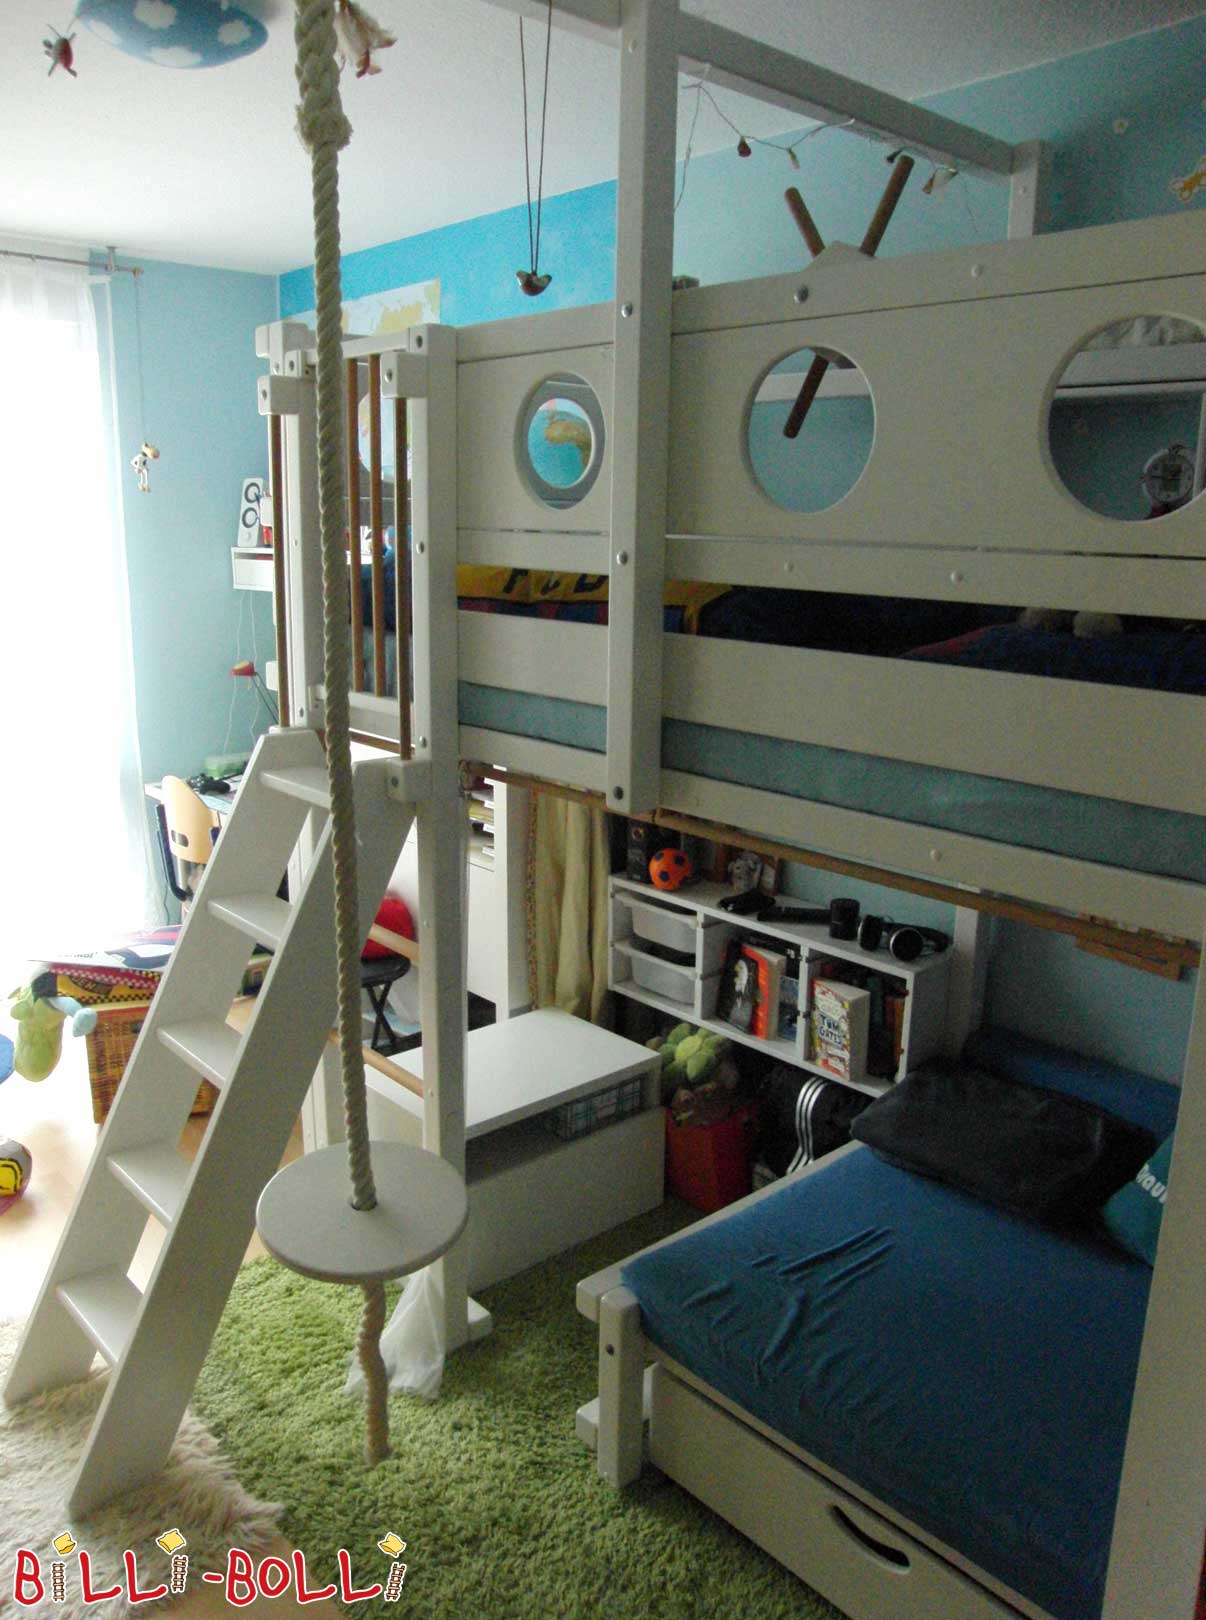 Acollidor llit cantoner, de 90 x 200 cm, avet lacat blanc (Categoria: Mobiliari infantil usat)